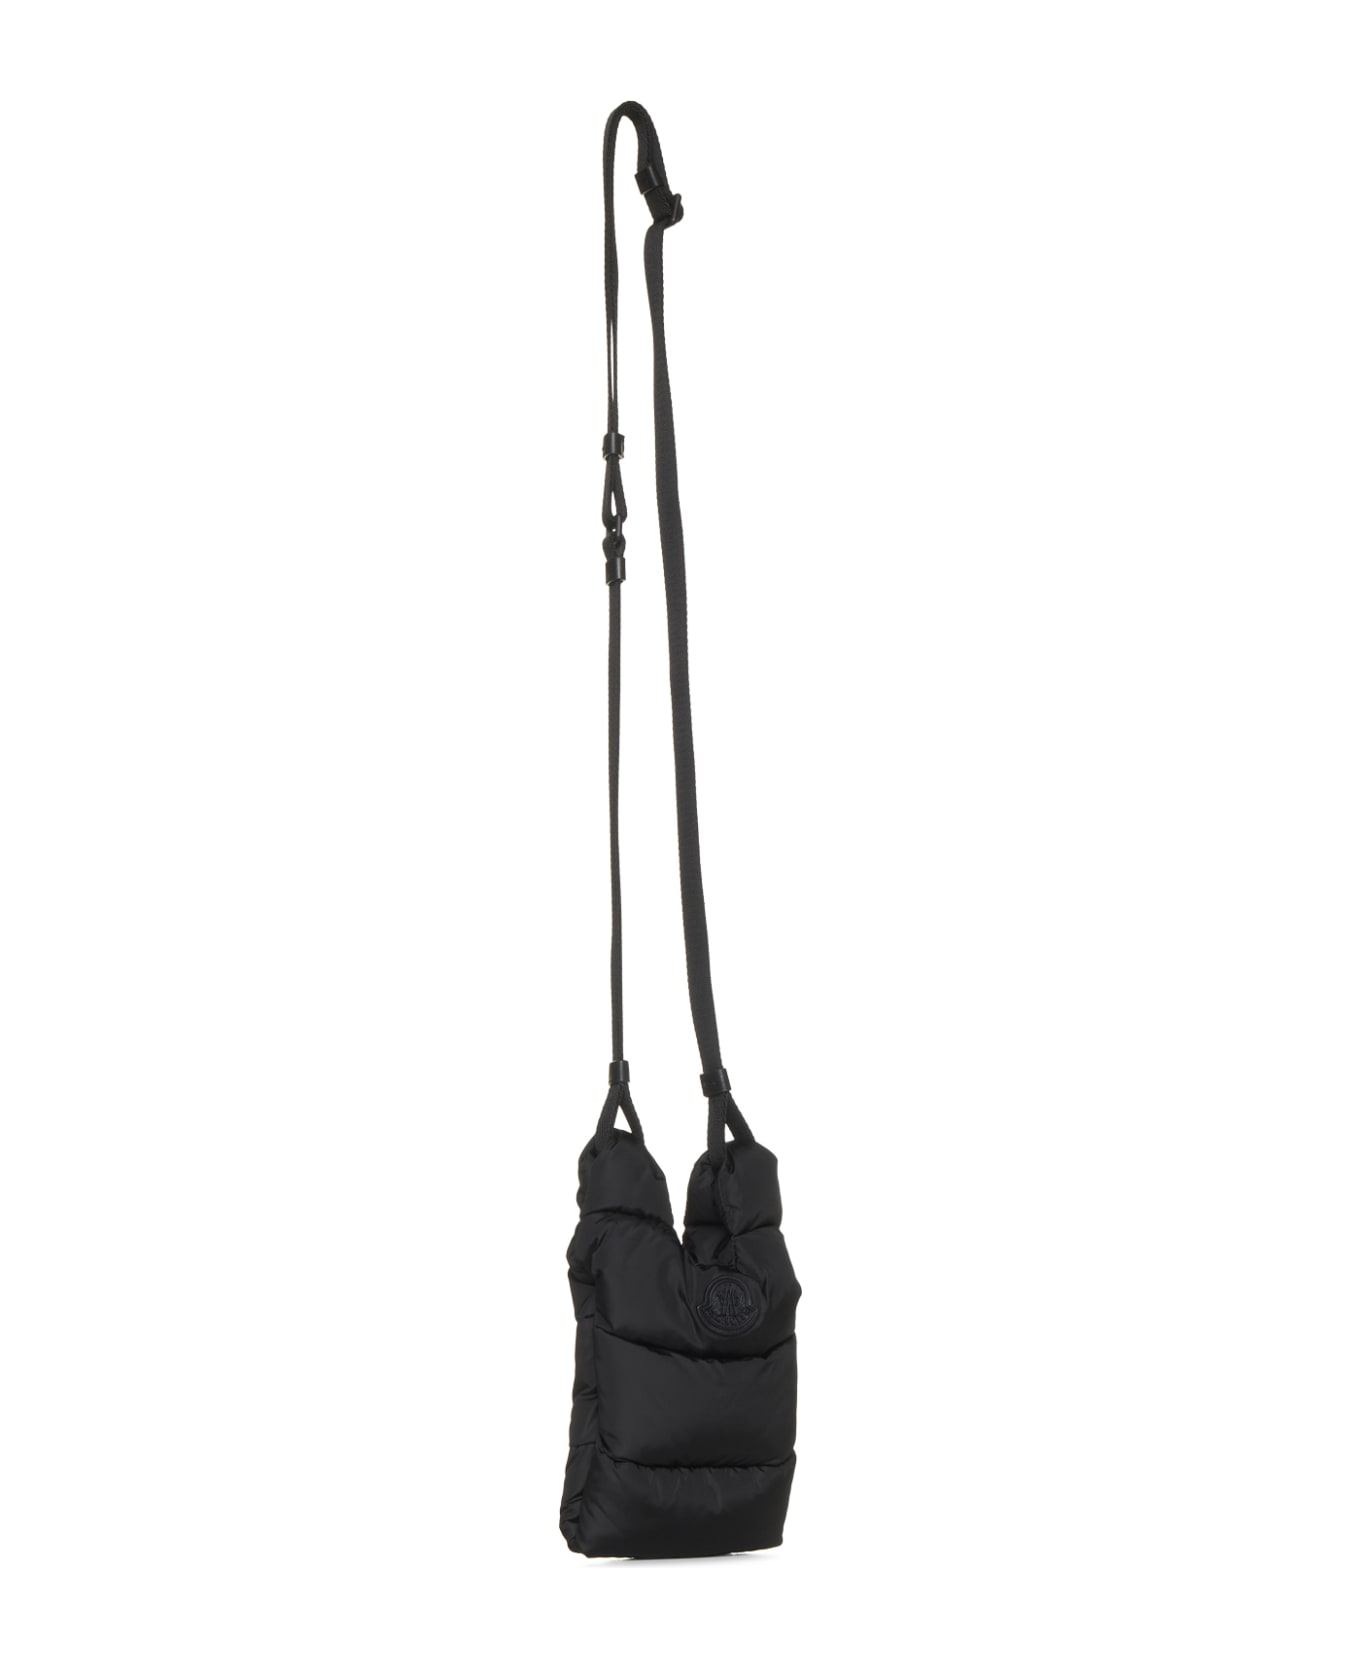 Moncler Black Legere Crossbody Bag - Black